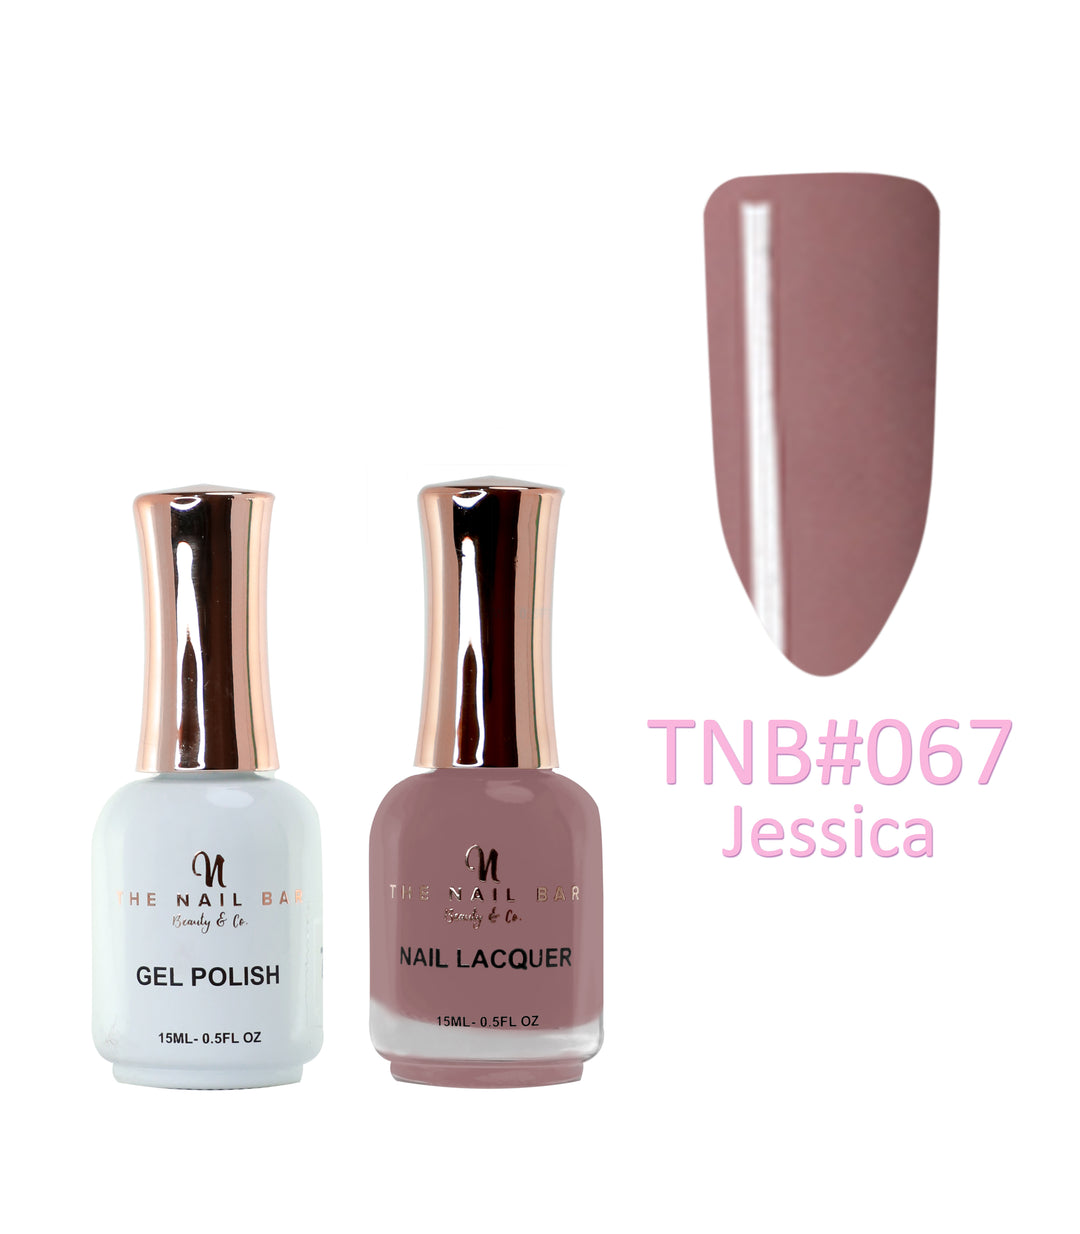 Dual Polish/Gel colour matching (15ml) - Jessica - The Nail Bar Beauty & Co.